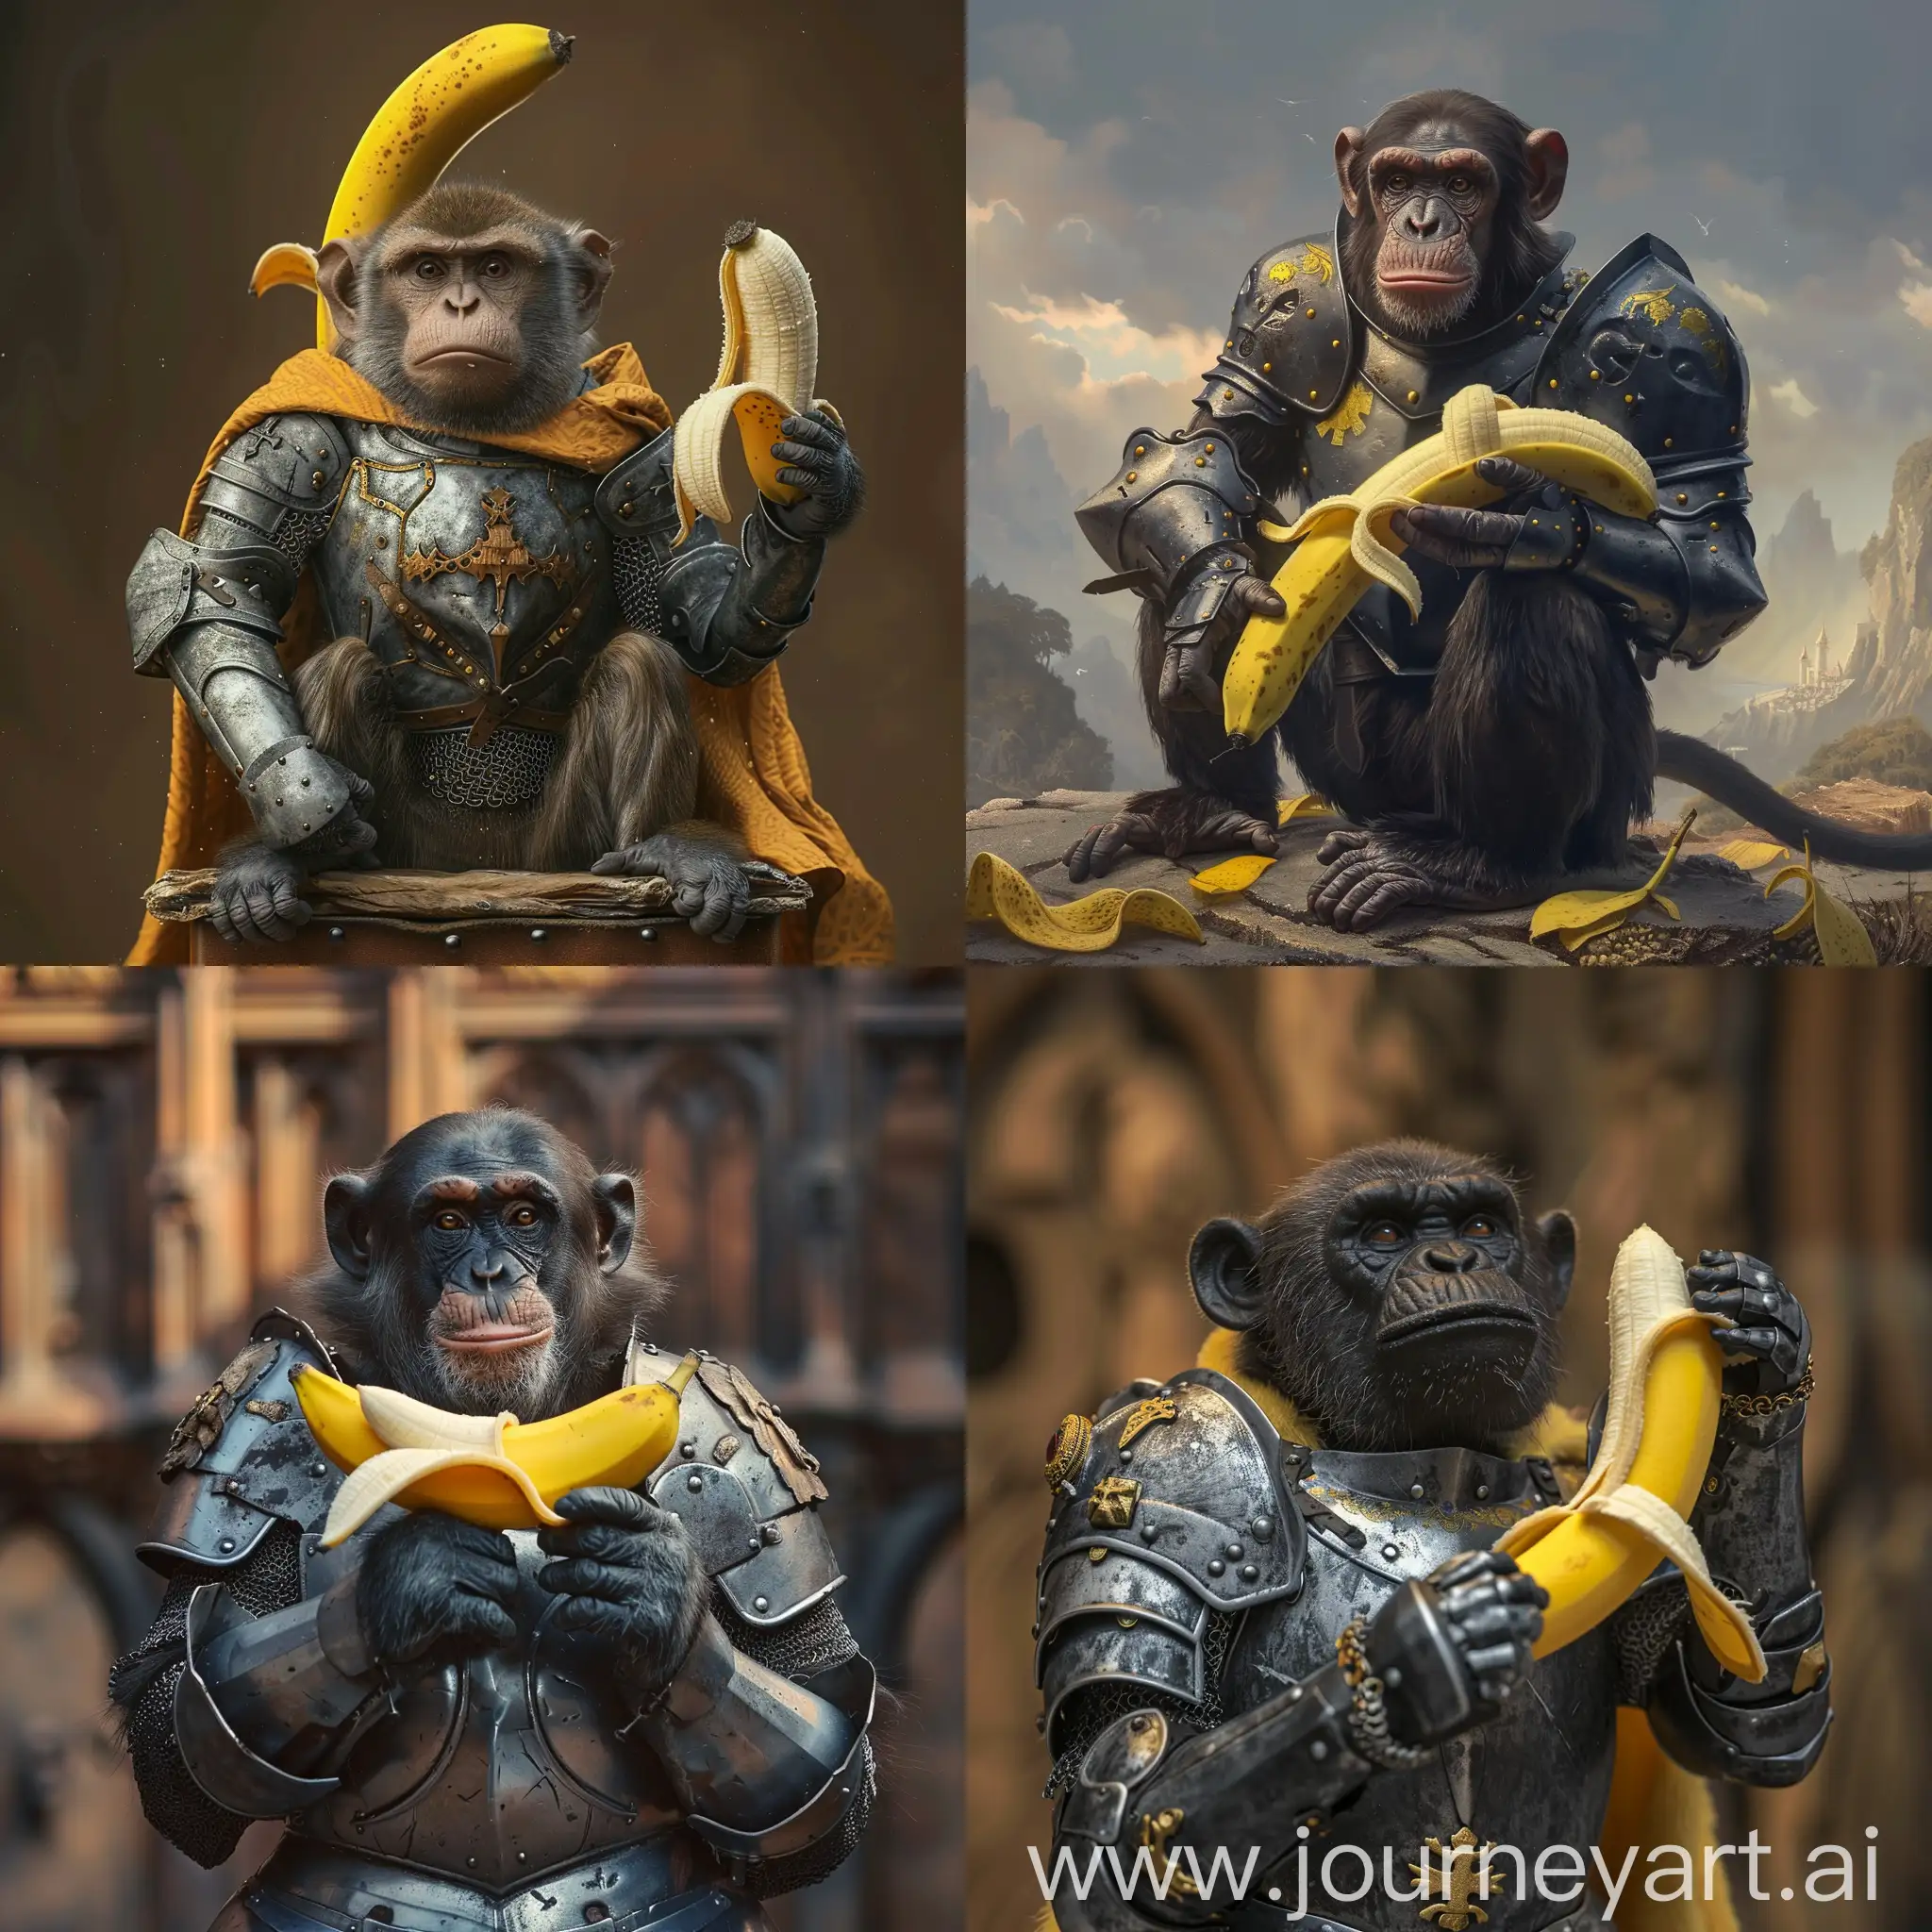 Обезьяна посвящает в банан в доспехах в рыцари, обезьяна посвящает банан в доспехах